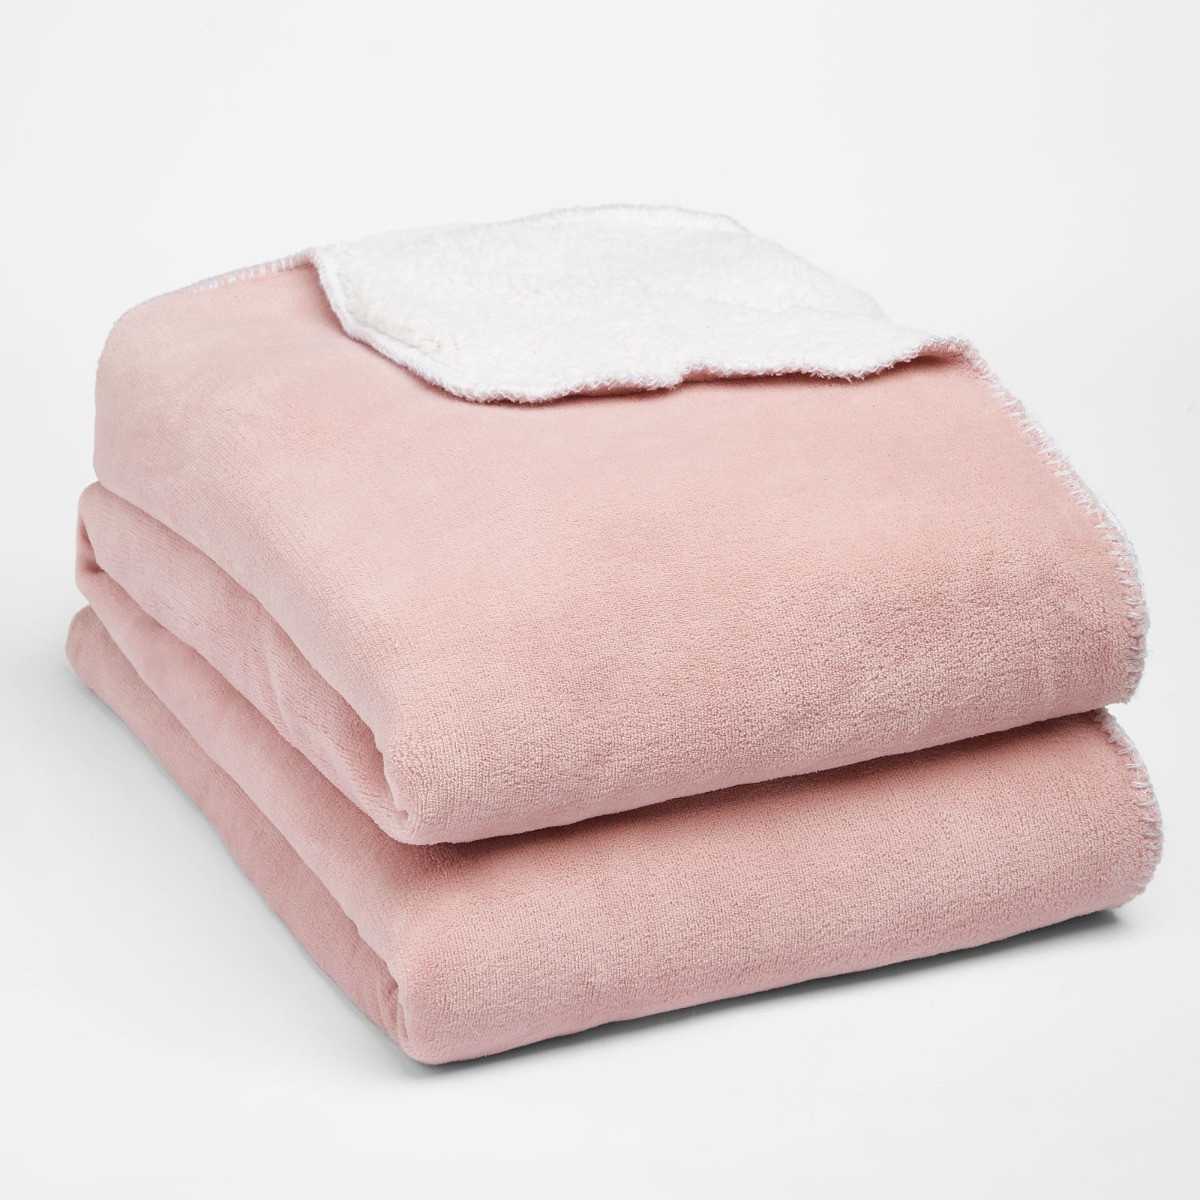 Brentfords Sherpa Fleece Throw, Blush Pink - 150 x 180cm>